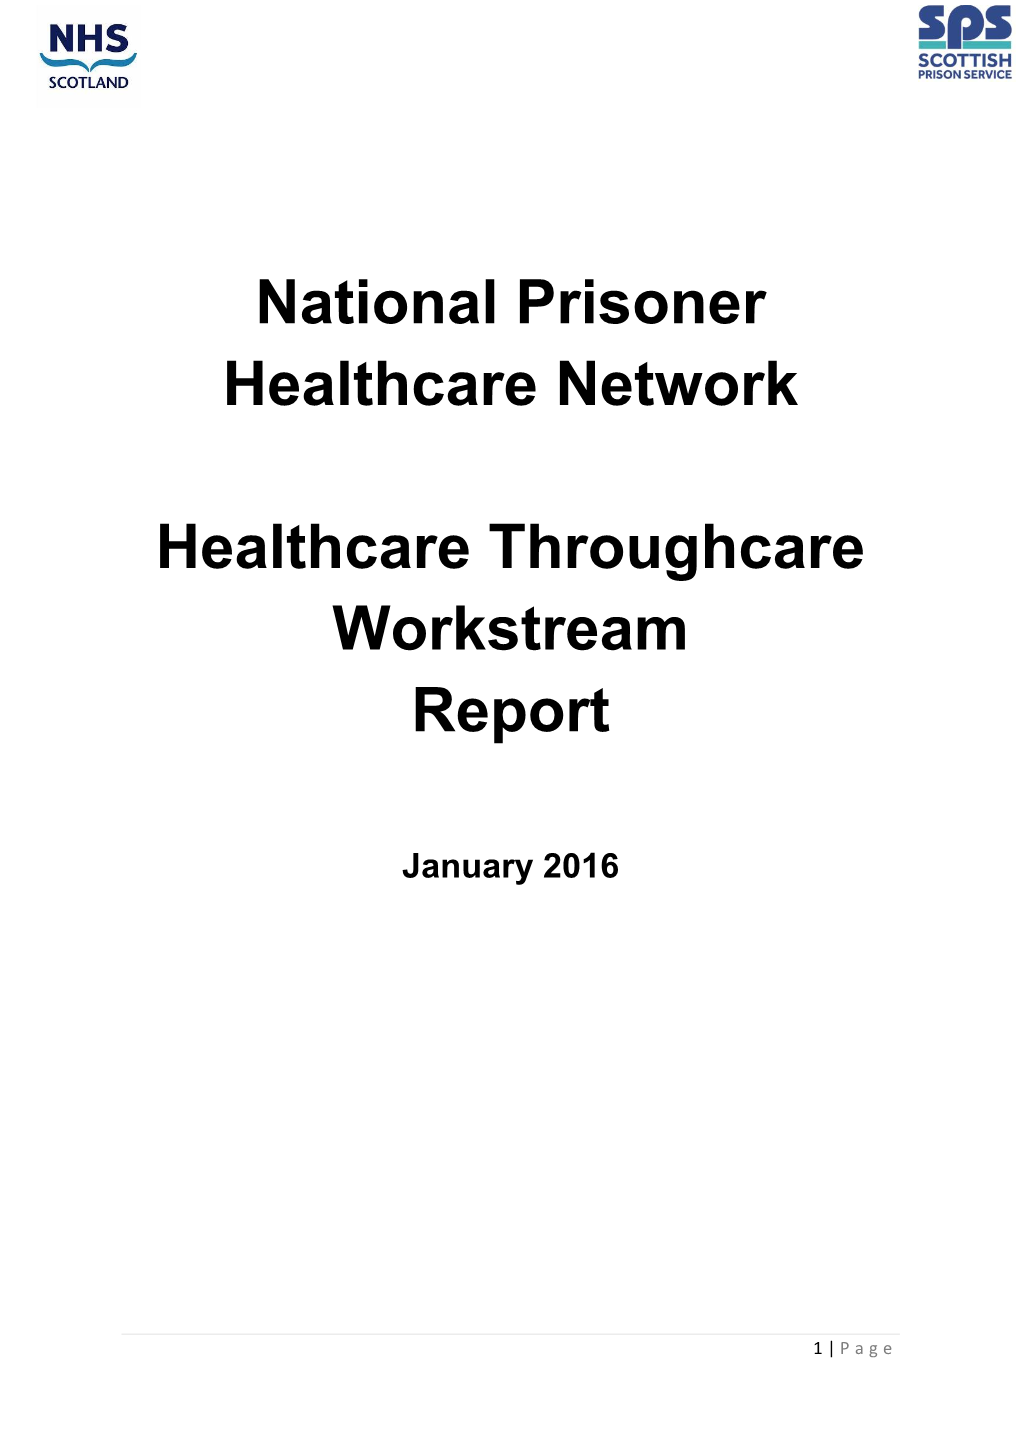 National Prison Healthcare Network